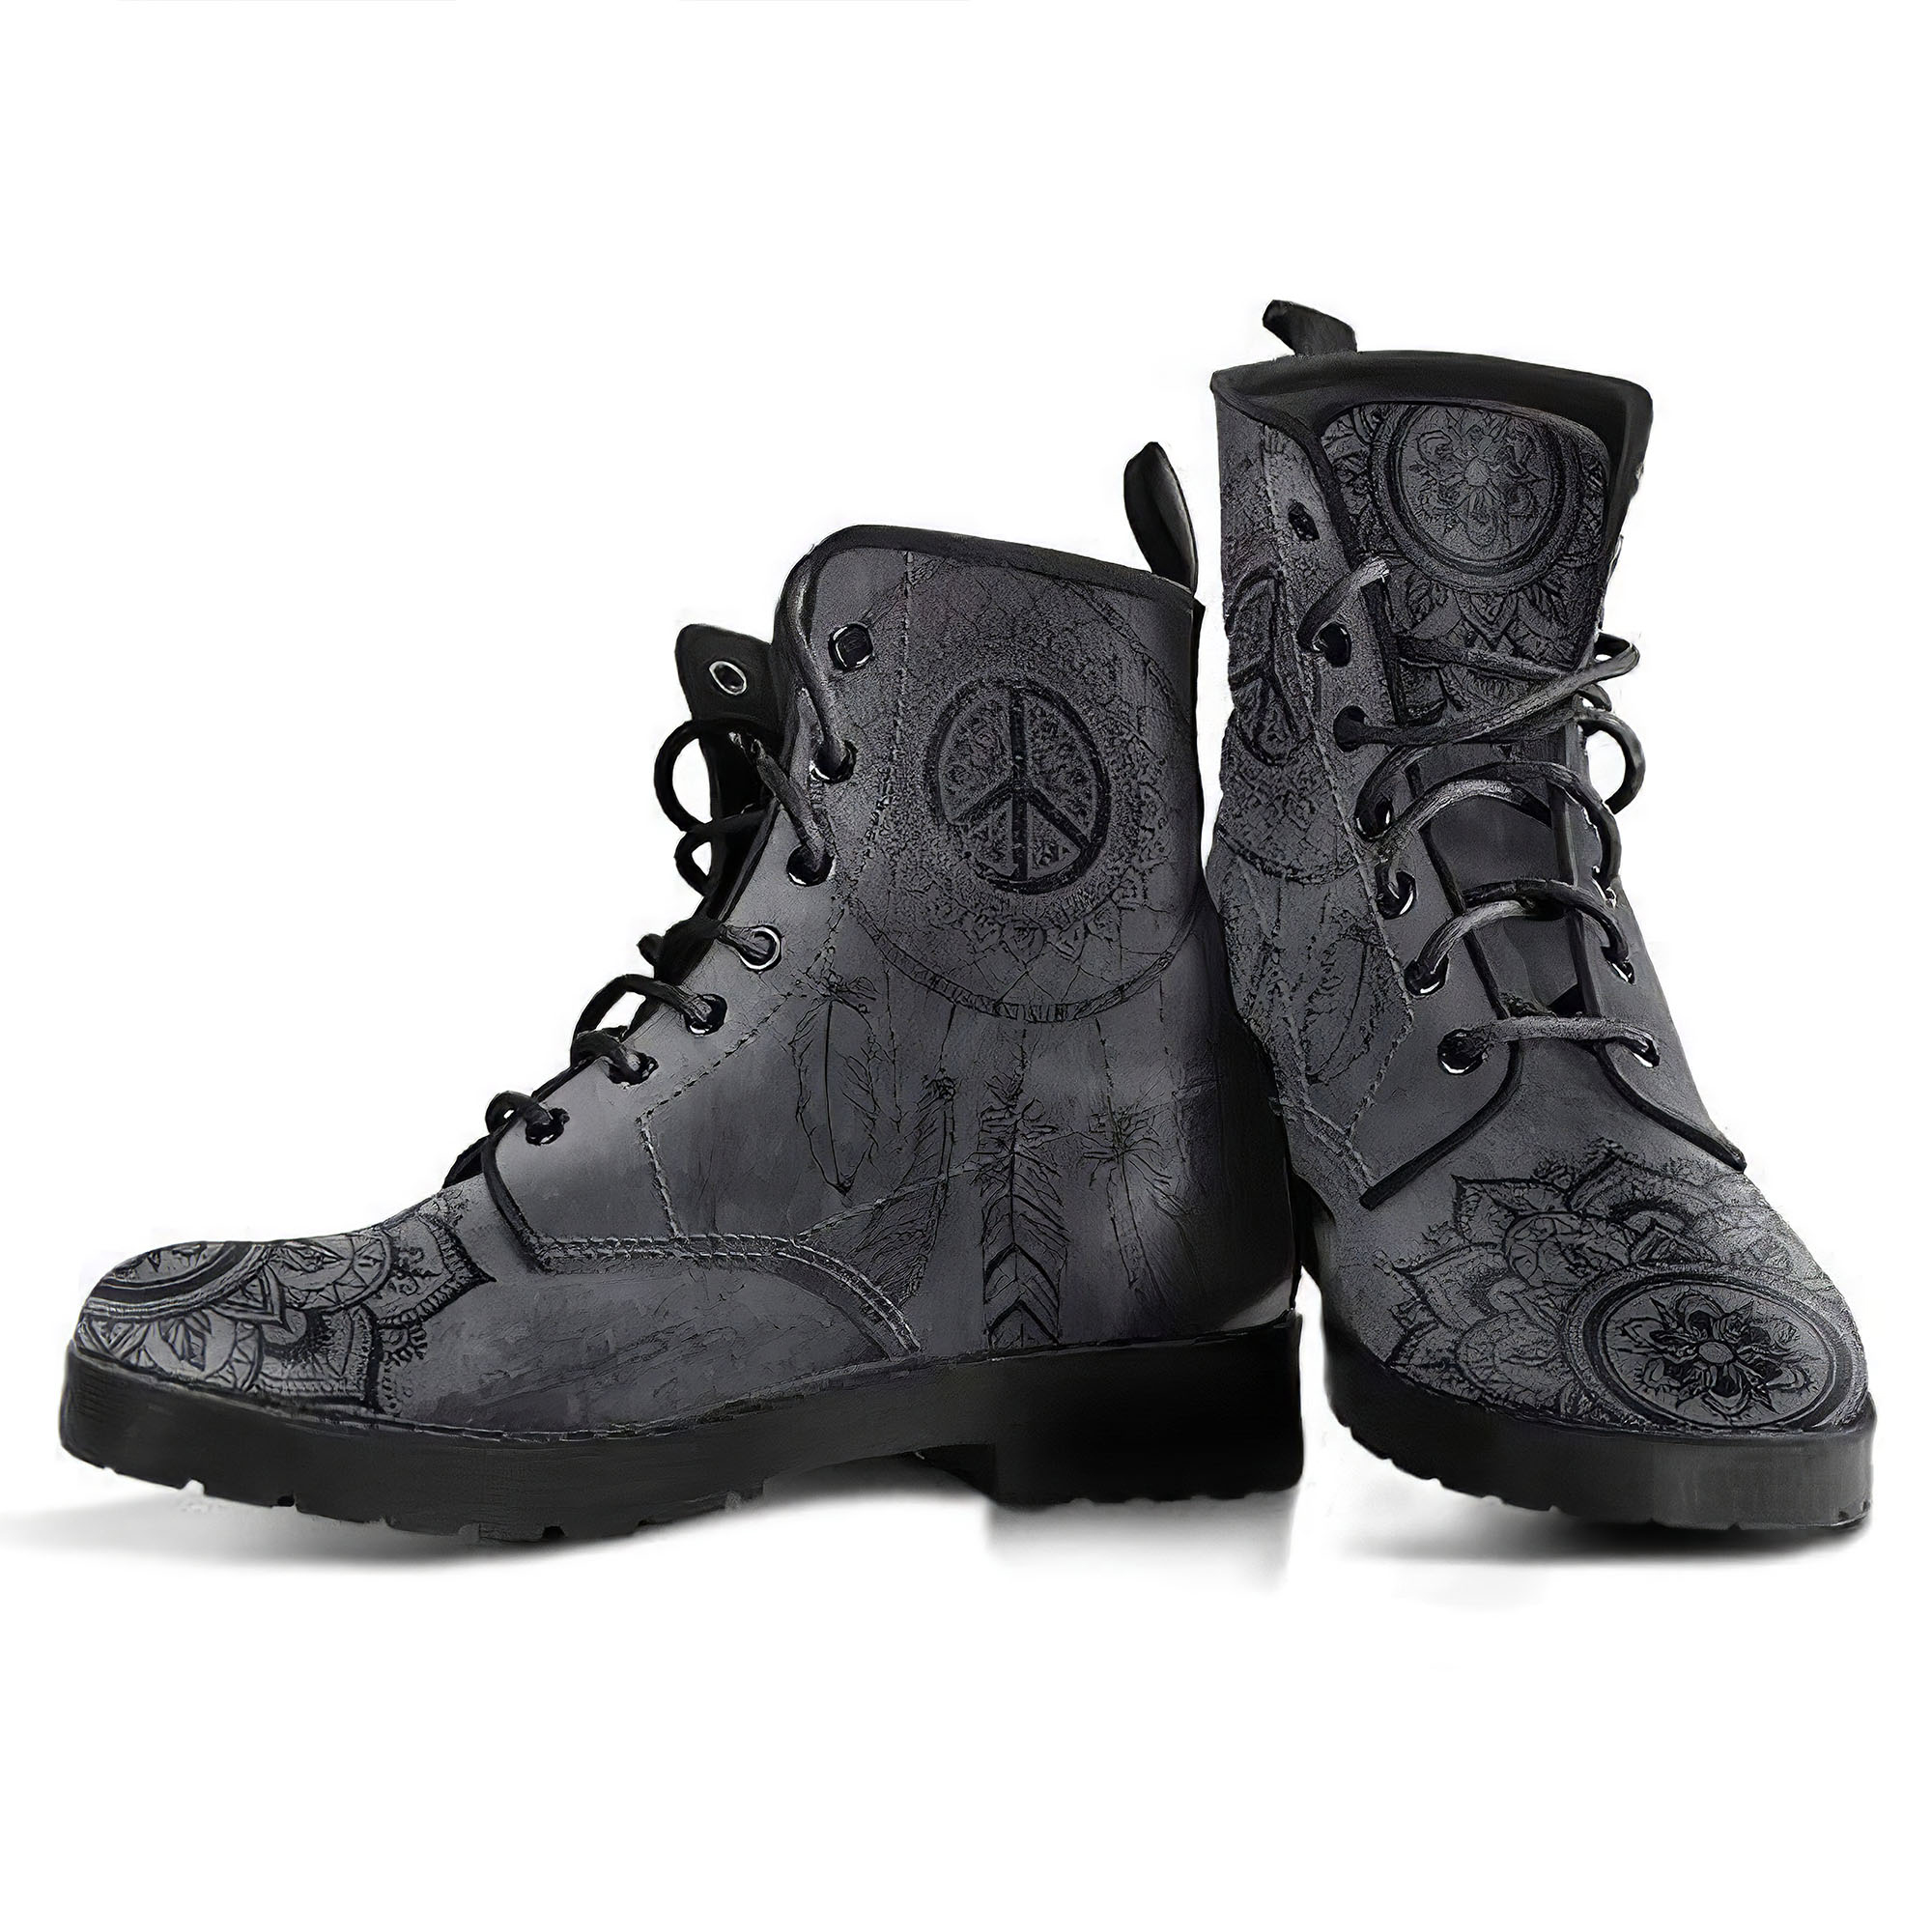 dark-gray-peace-dreamcatcher-handcrafted-boots-gp-main.jpg